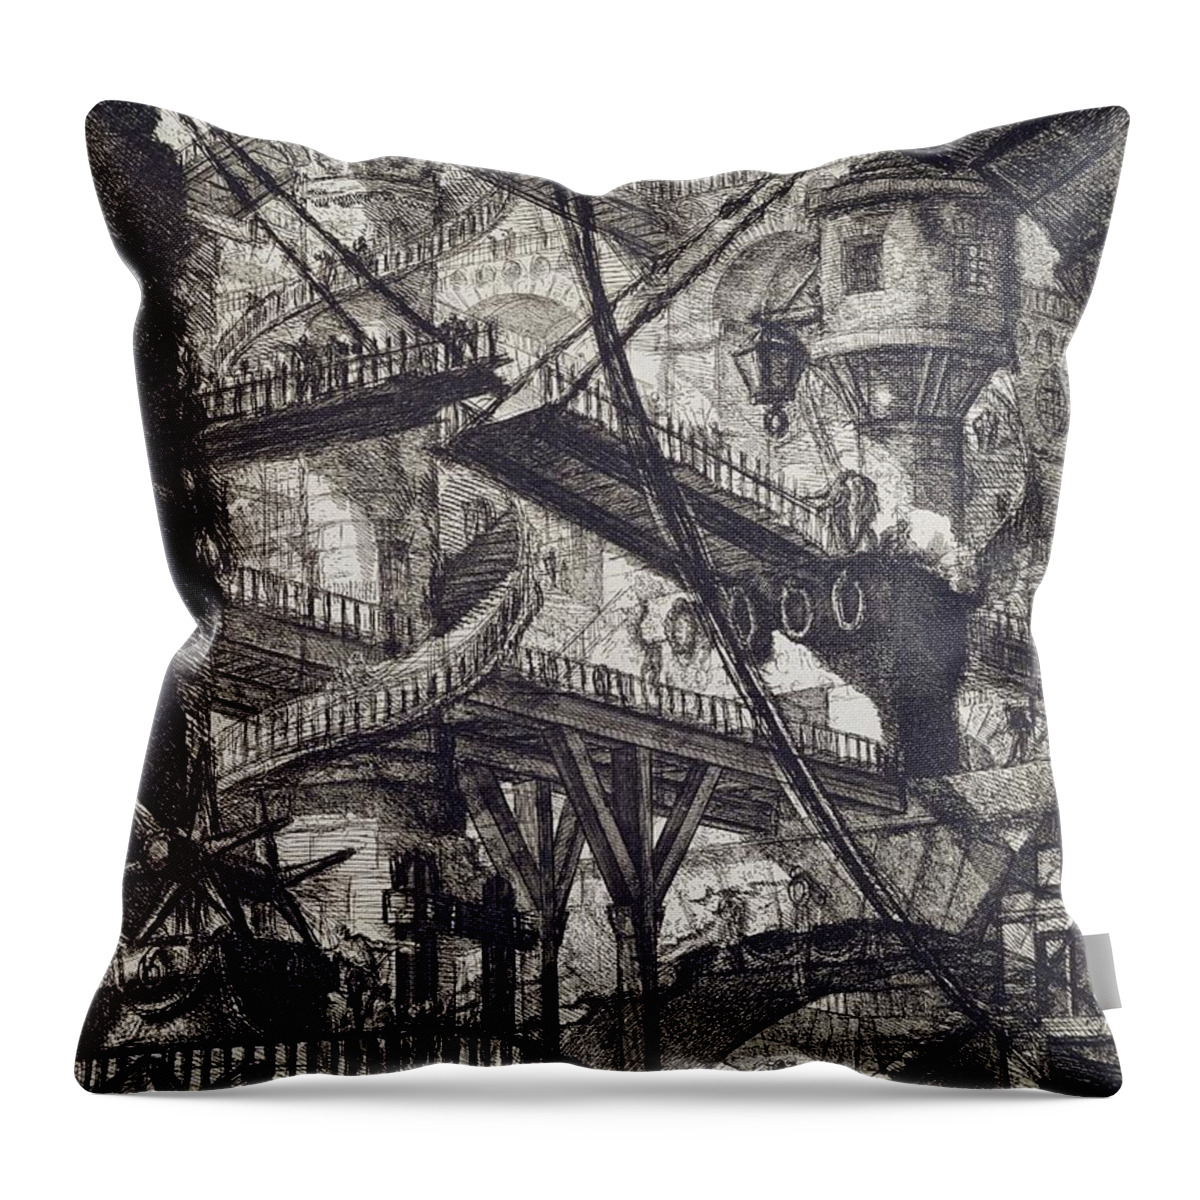 Prison Throw Pillow featuring the drawing Carceri VII by Giovanni Battista Piranesi